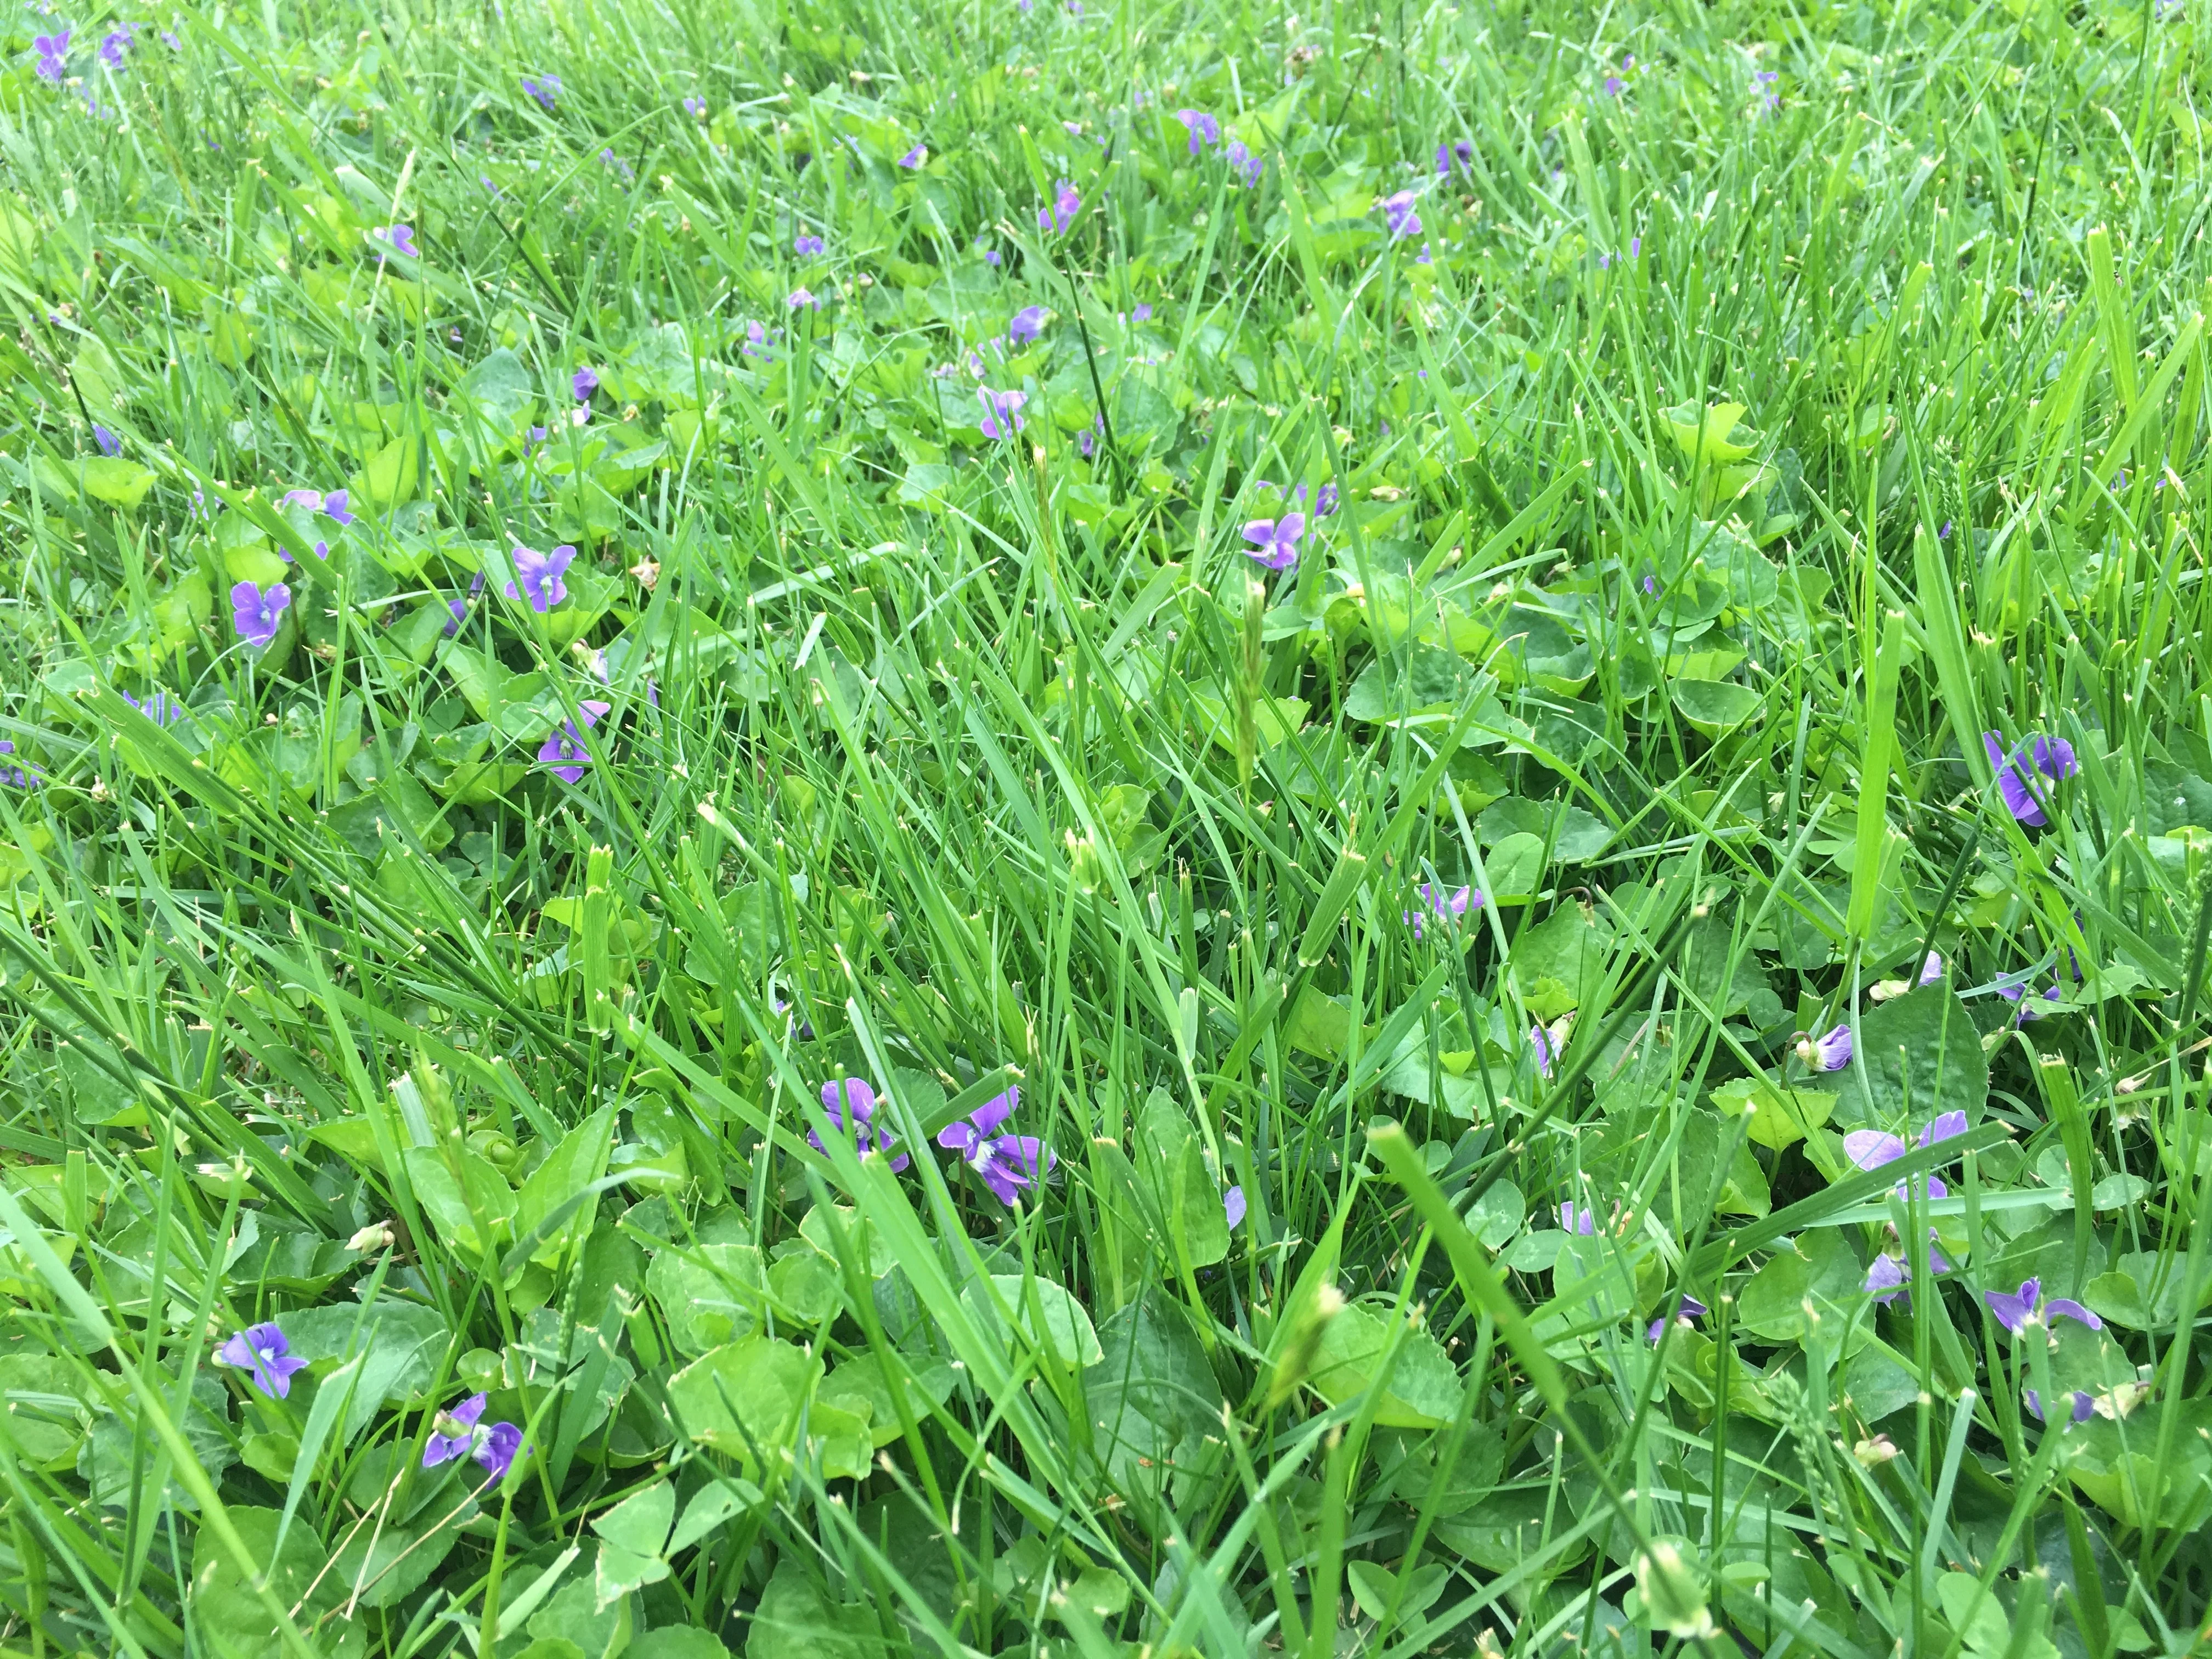 Wild violets in lawn